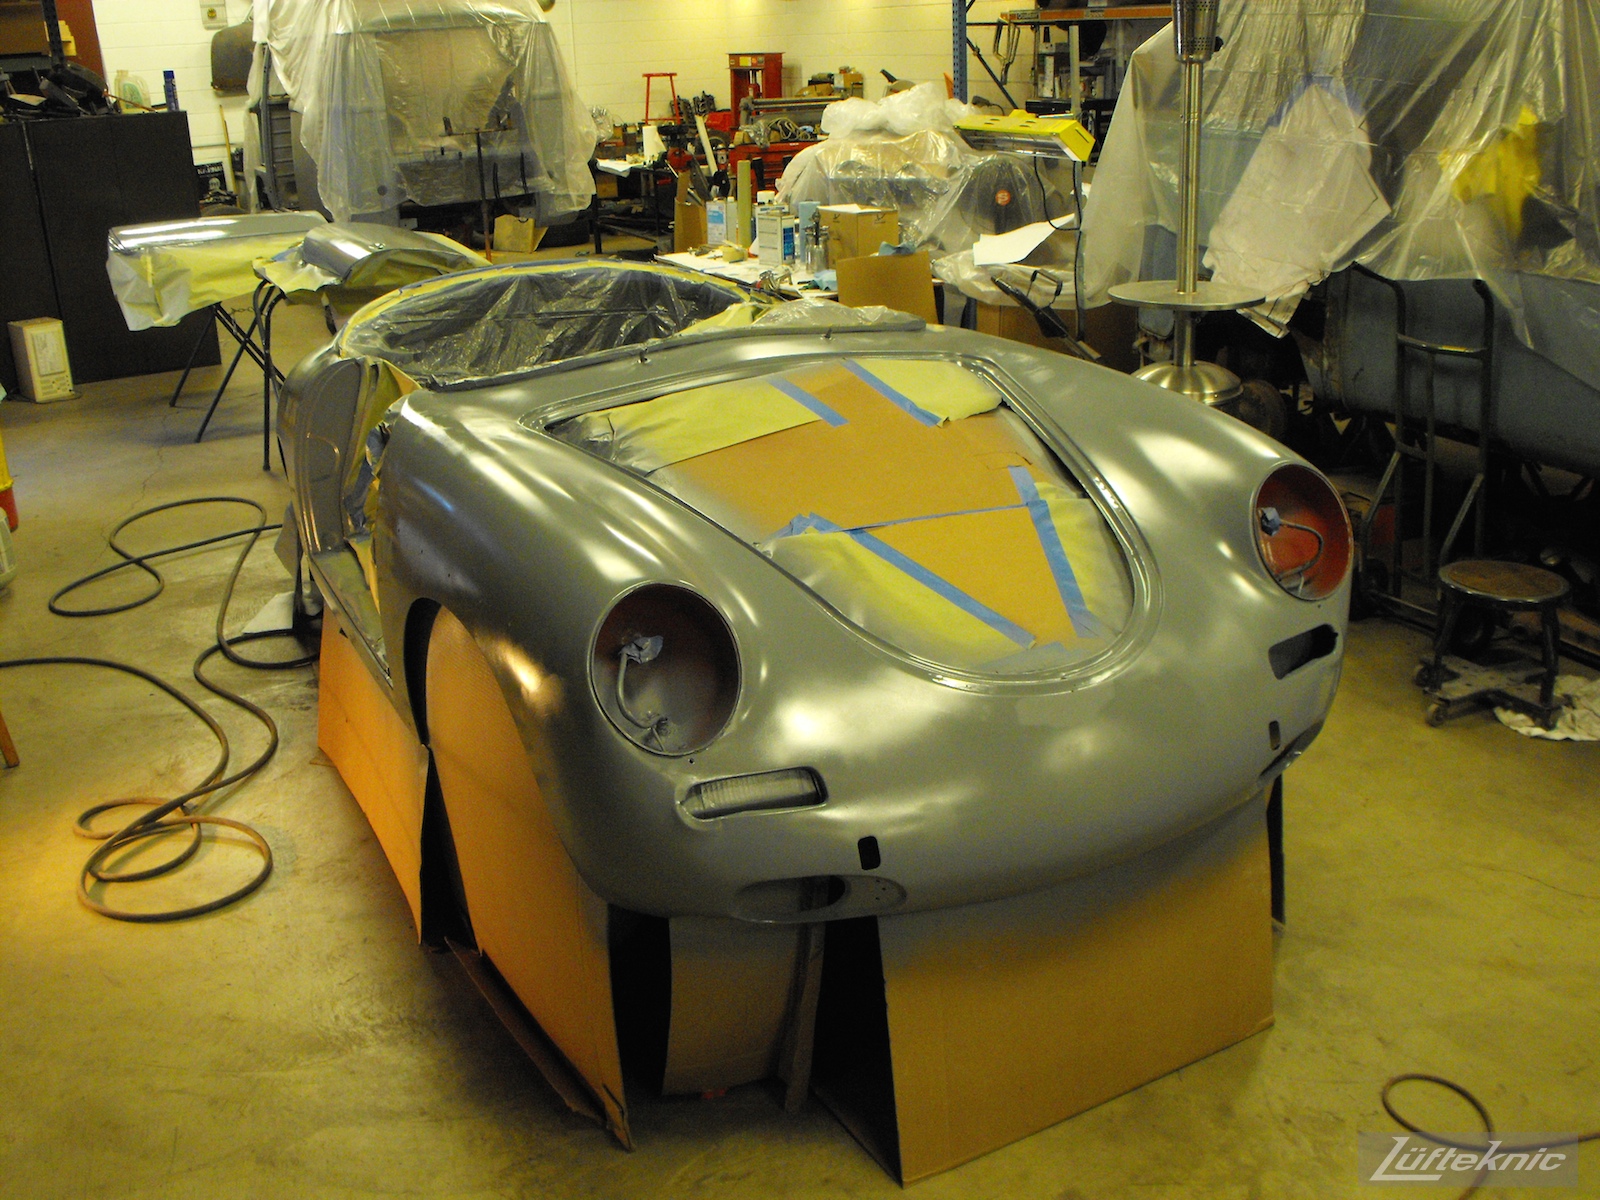 Primered body on a 1961 Porsche 356B Roadster restoration.